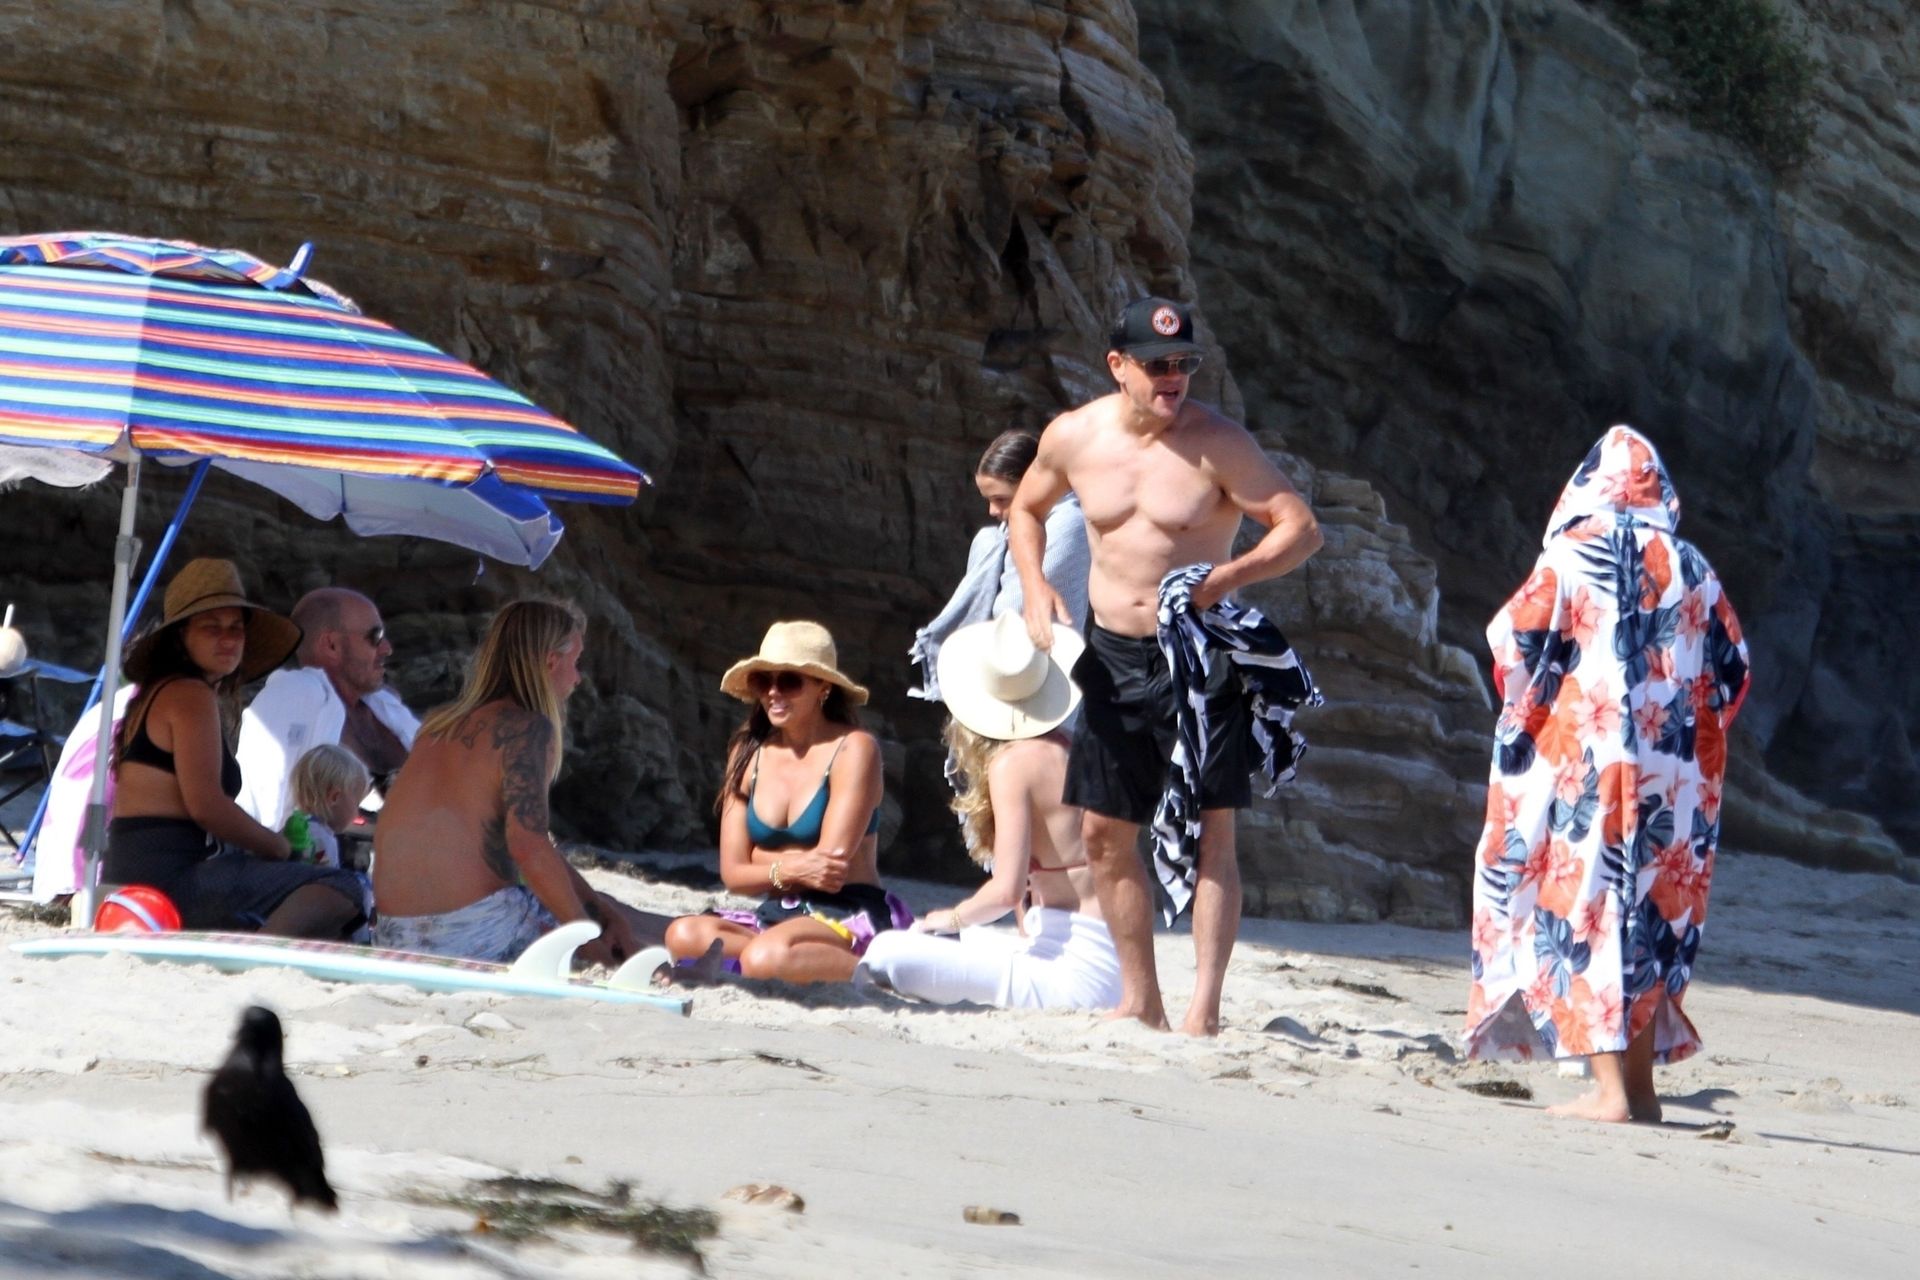 Mat
t Damon & Luciana Barroso Enjoy a Day at the Beach (29 Photos)